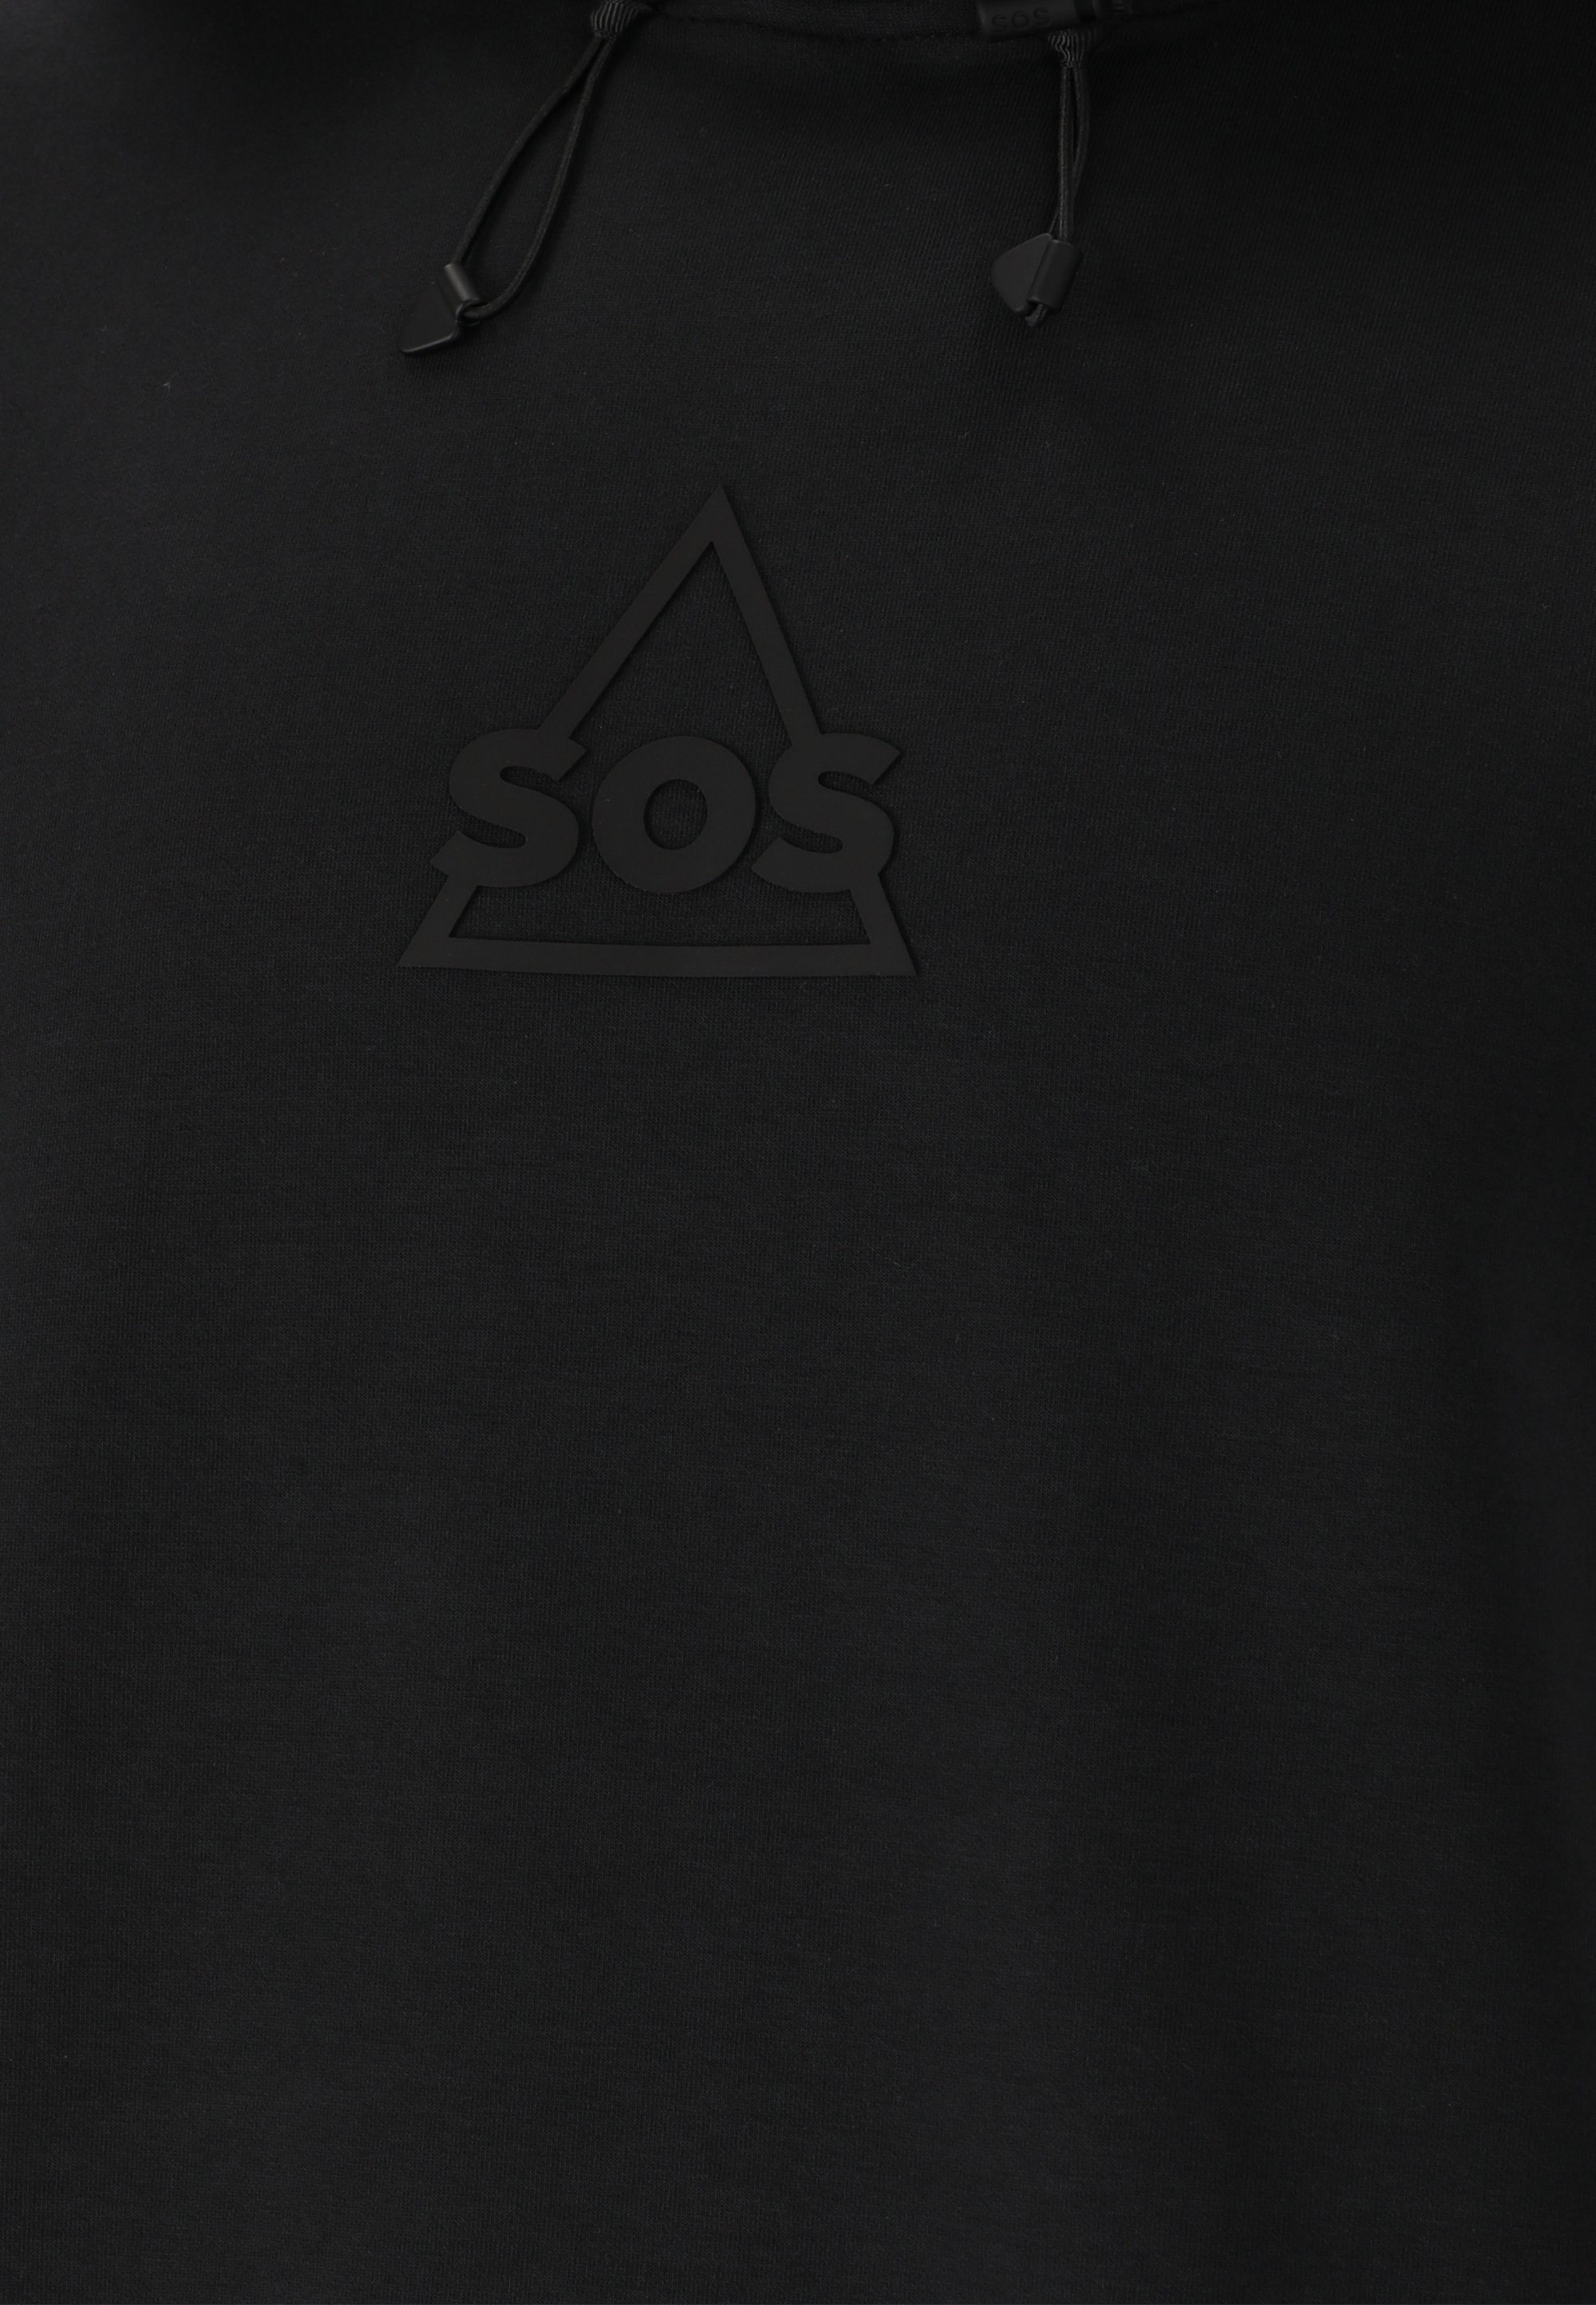 mit SOS schwarz Brust-Print coolem Kapuzensweatshirt Vail